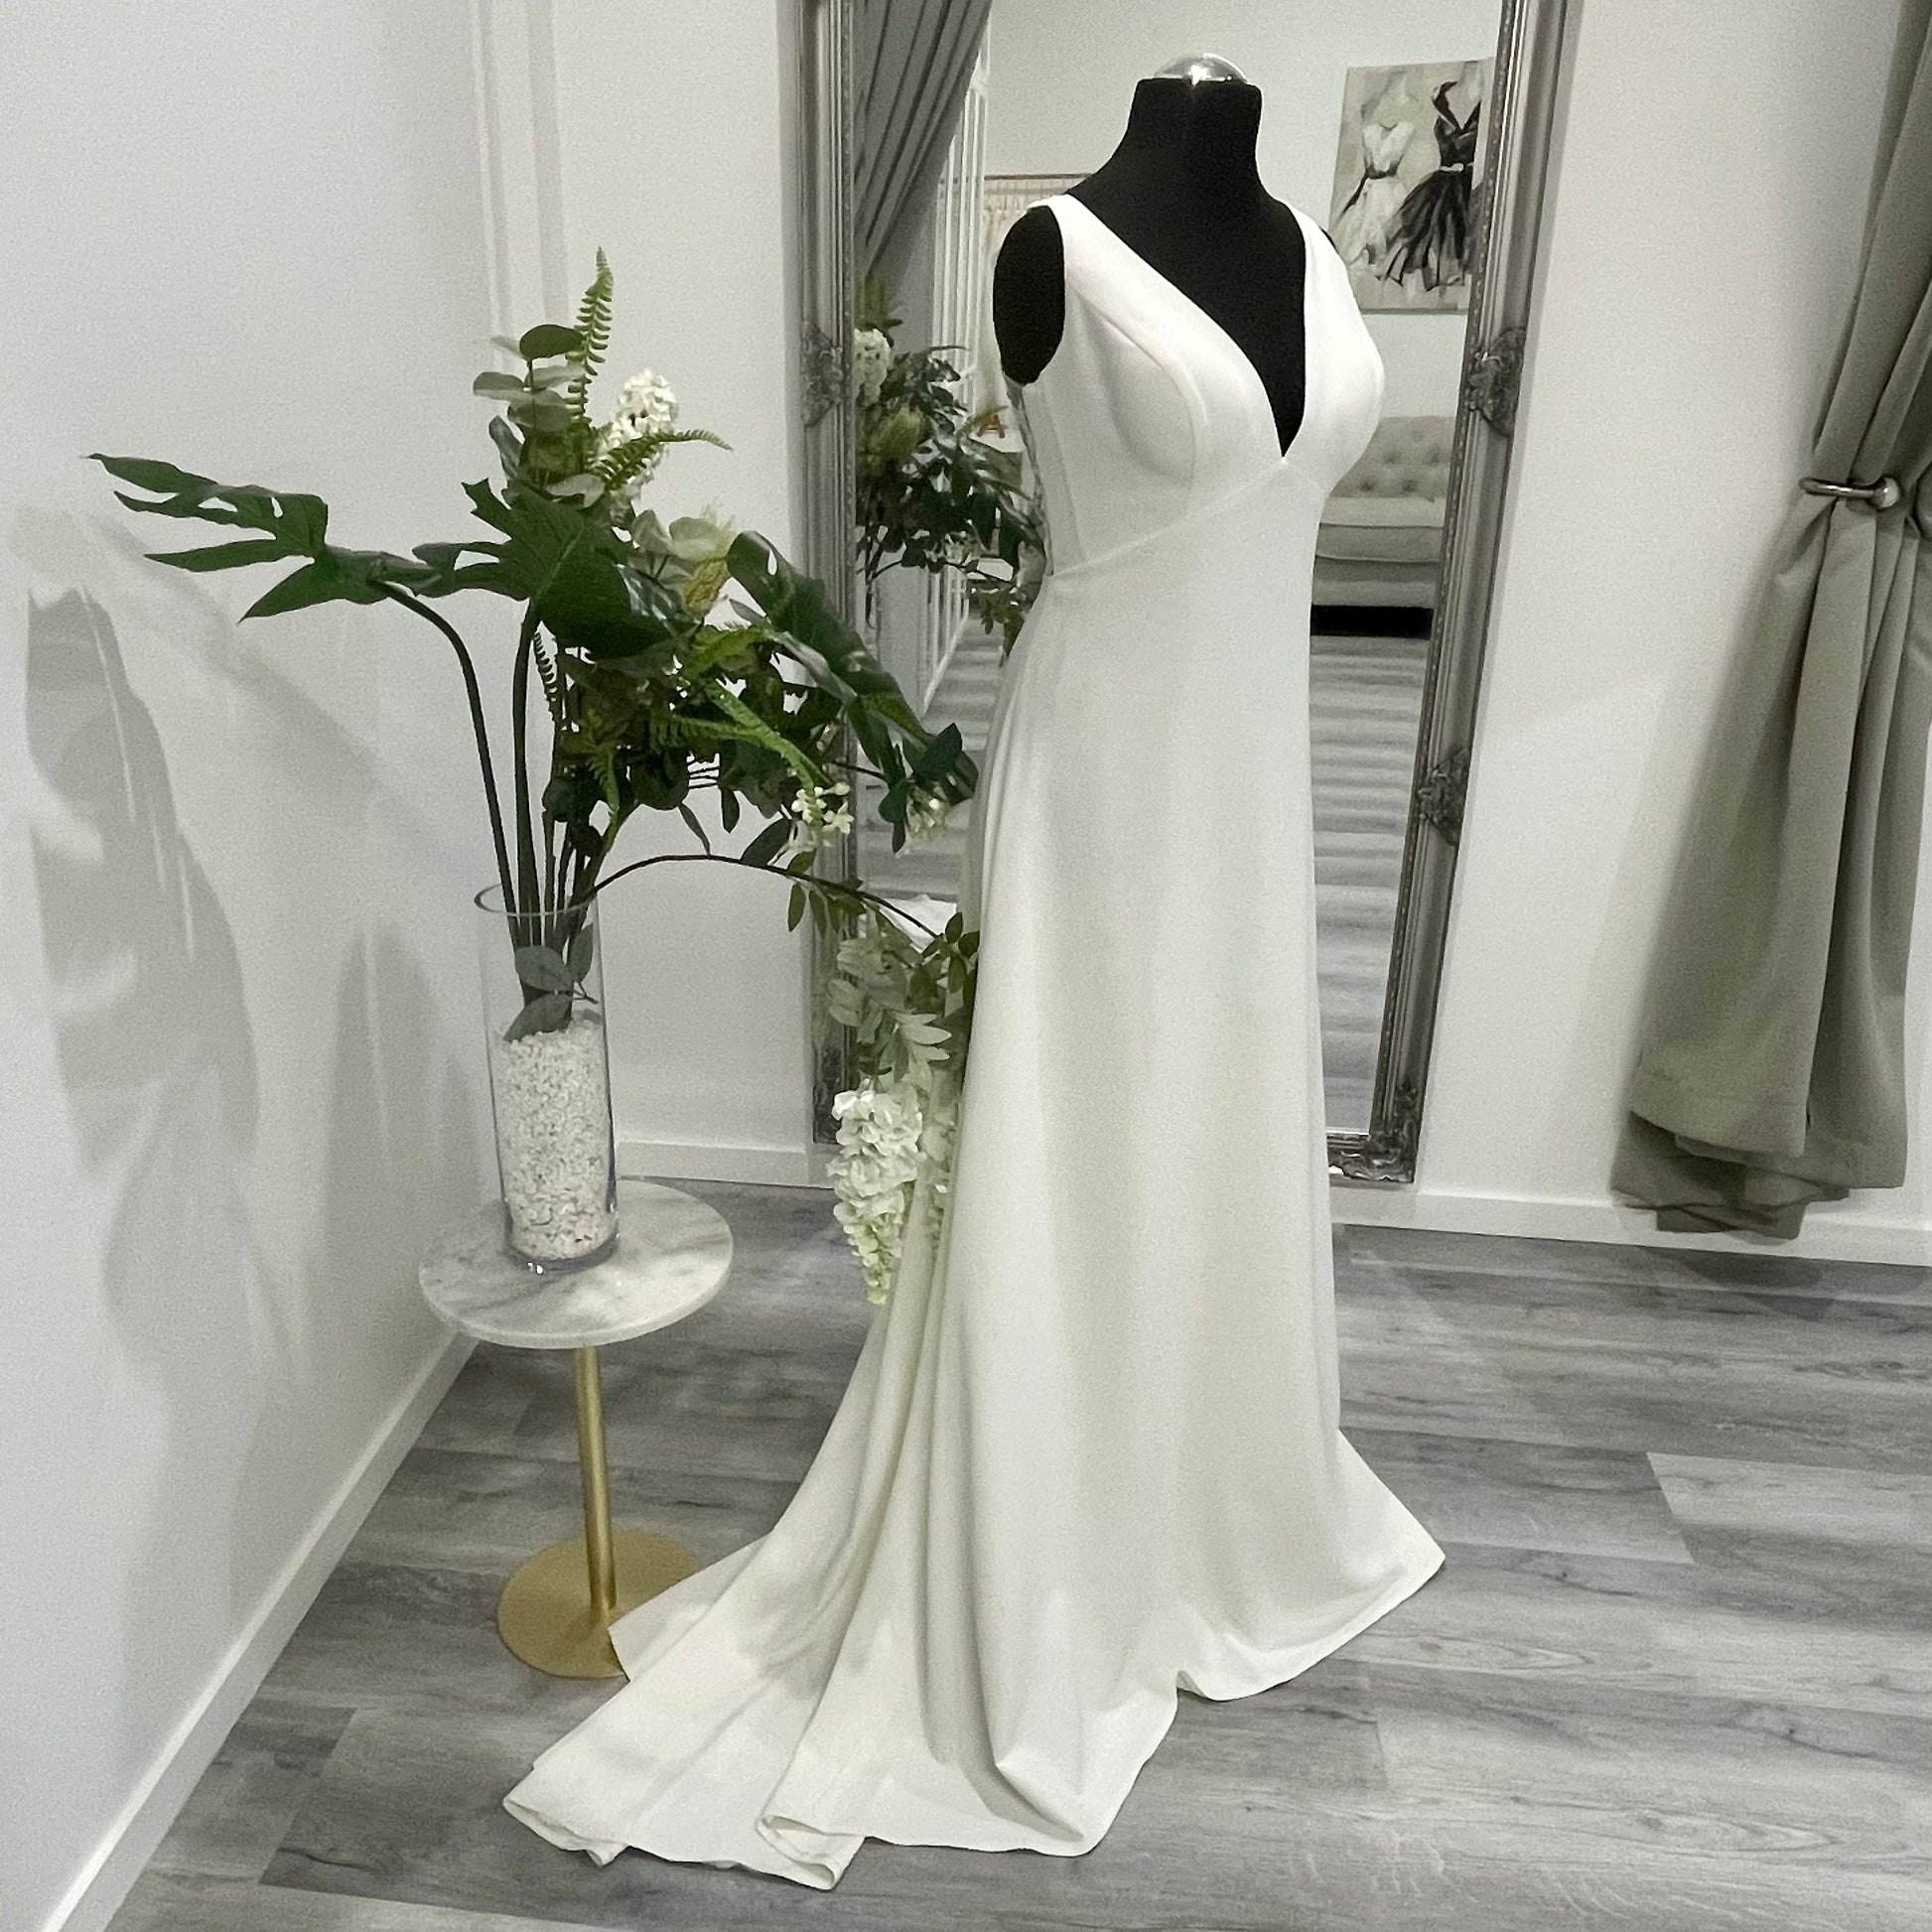 Isolde Wedding Dress - A minimalist design with elegant silhouette on display at Divine Bridal.